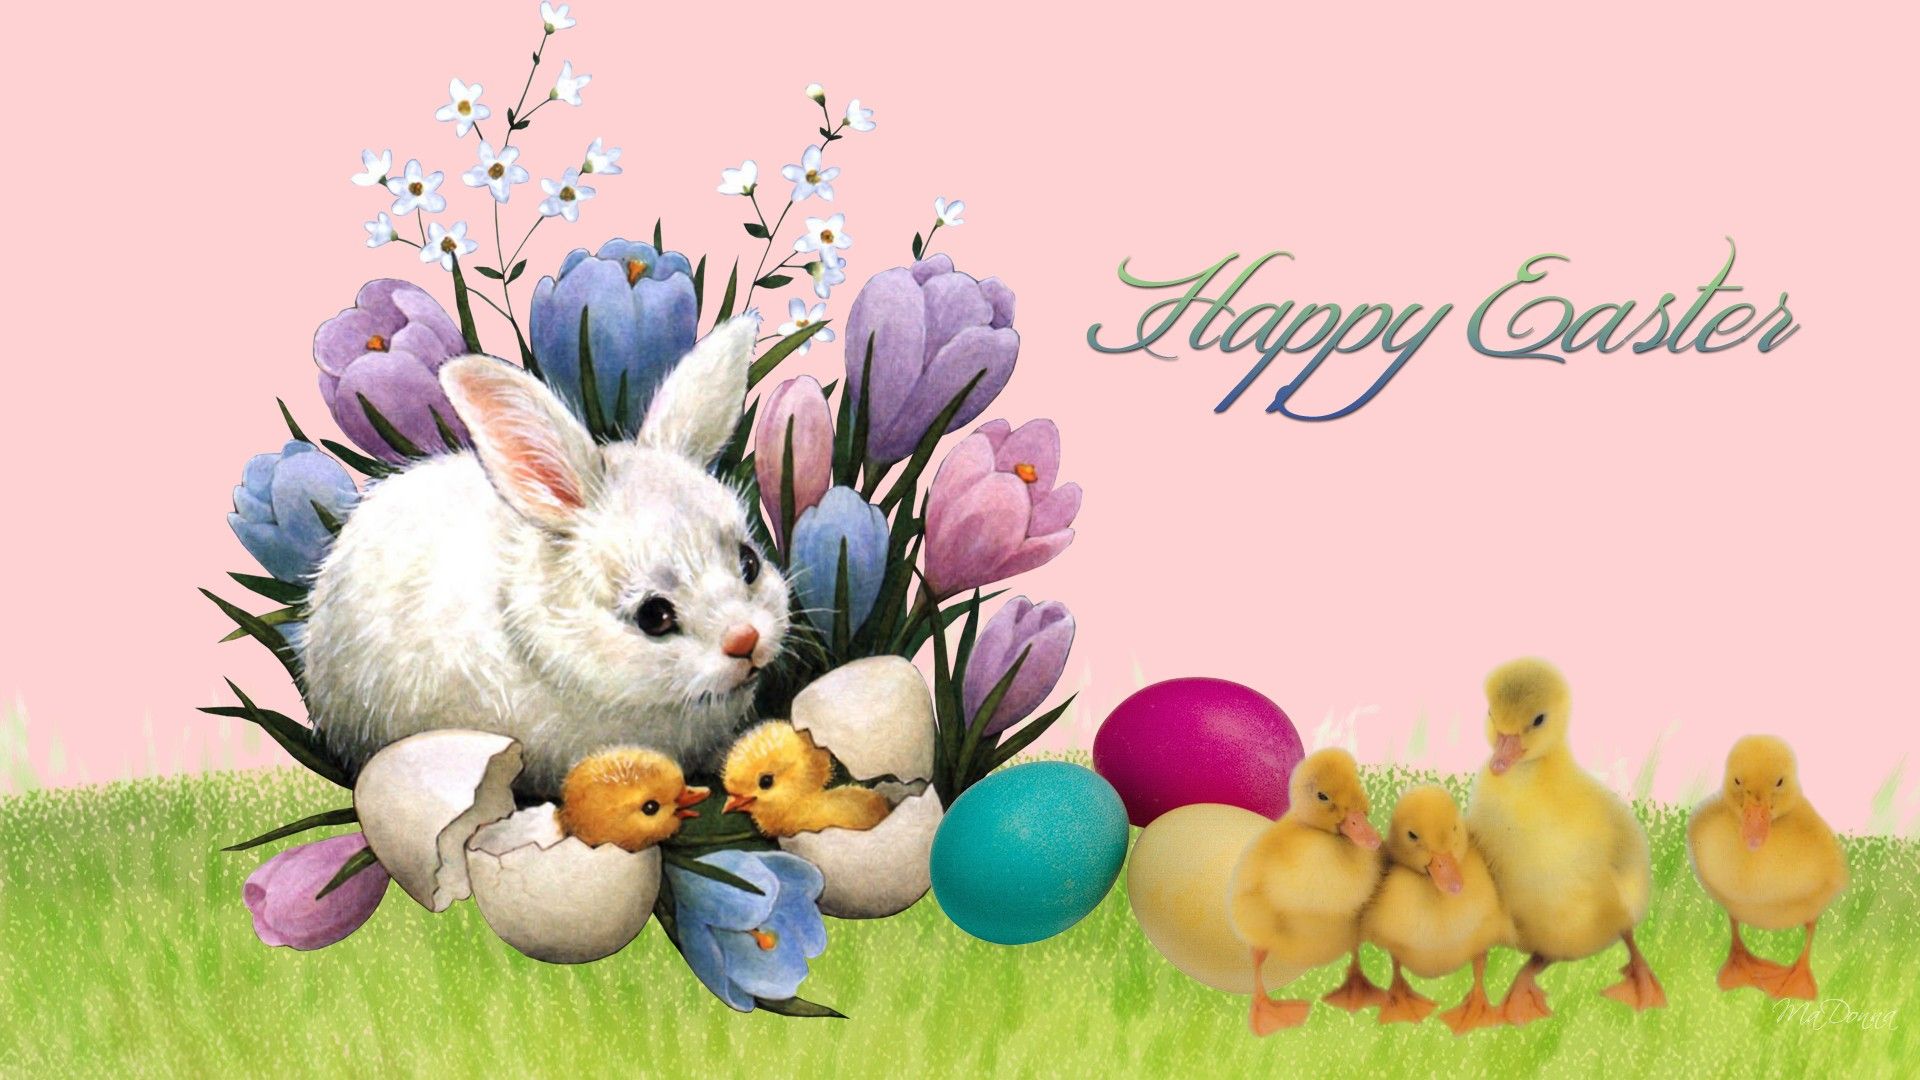 Free download Easter wallpaper 2014 2014 Easter greetings 2014